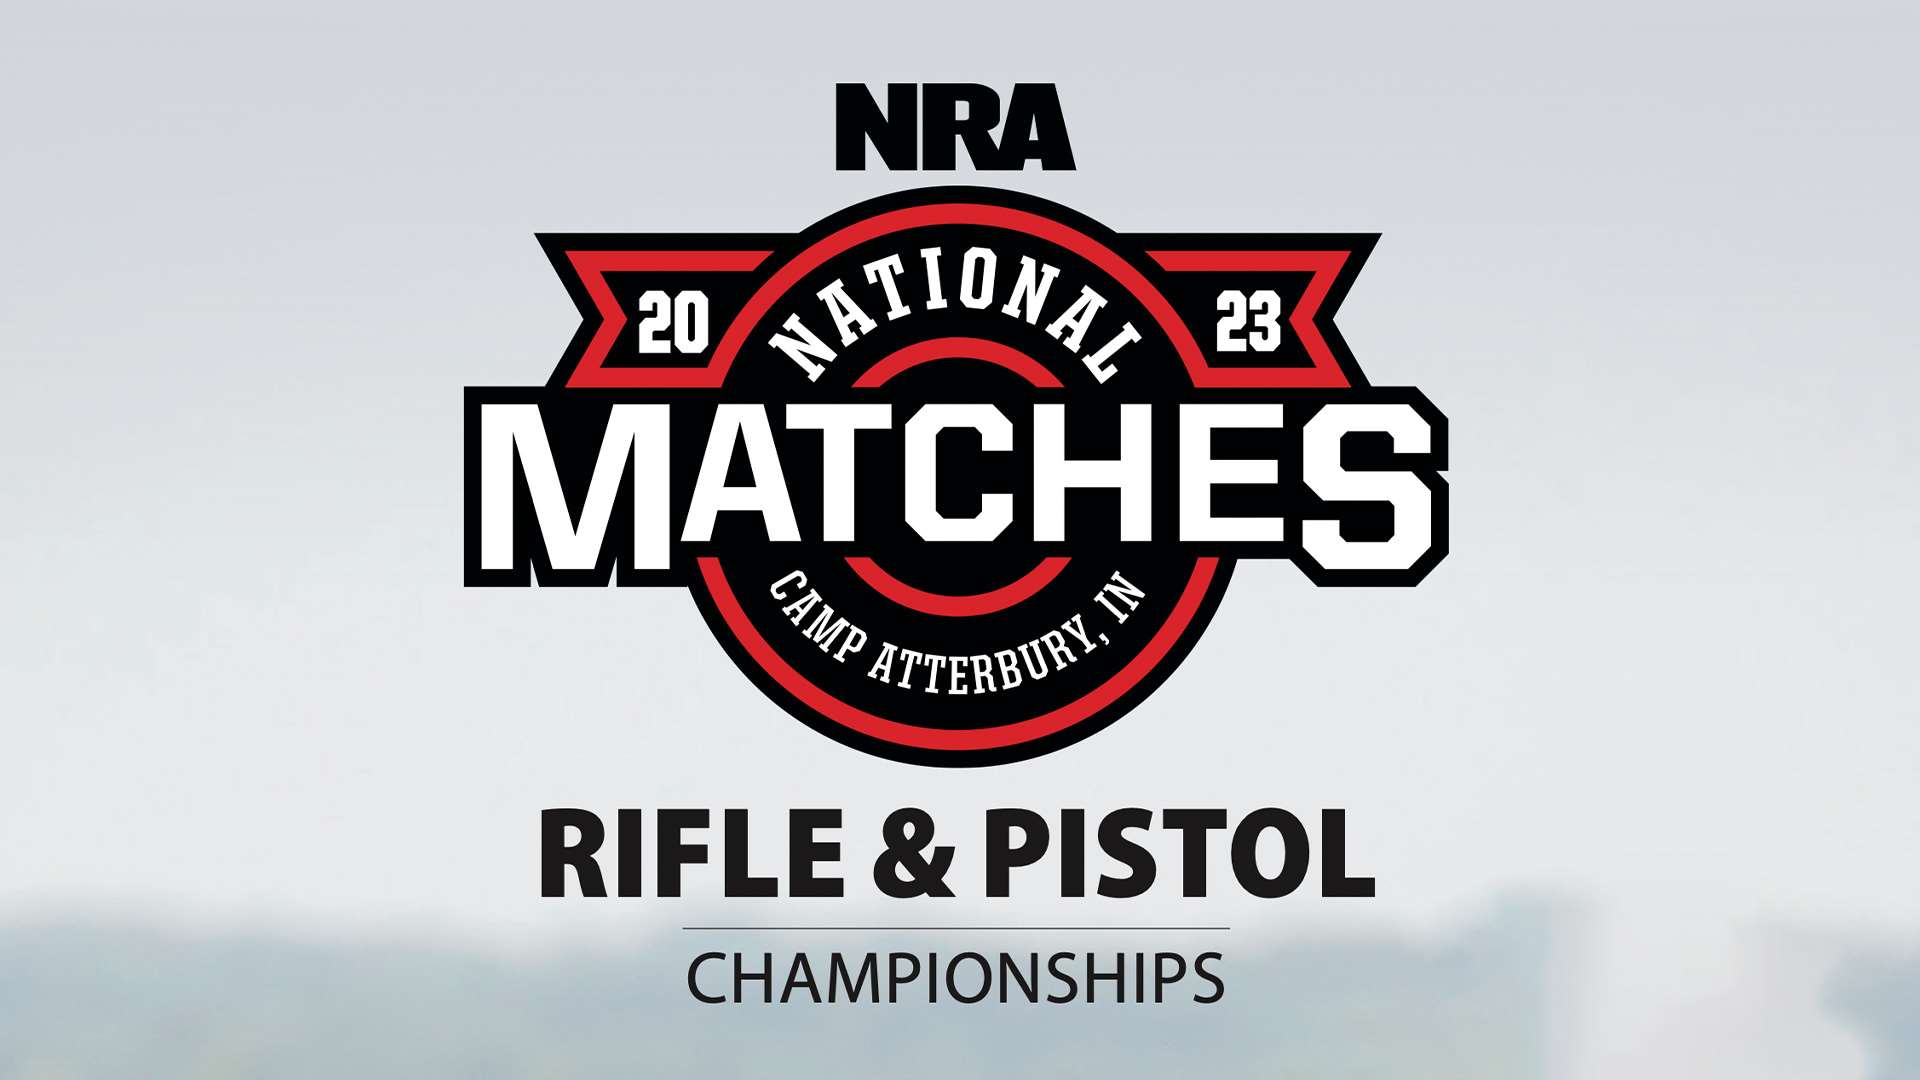 NRA National Matches logo